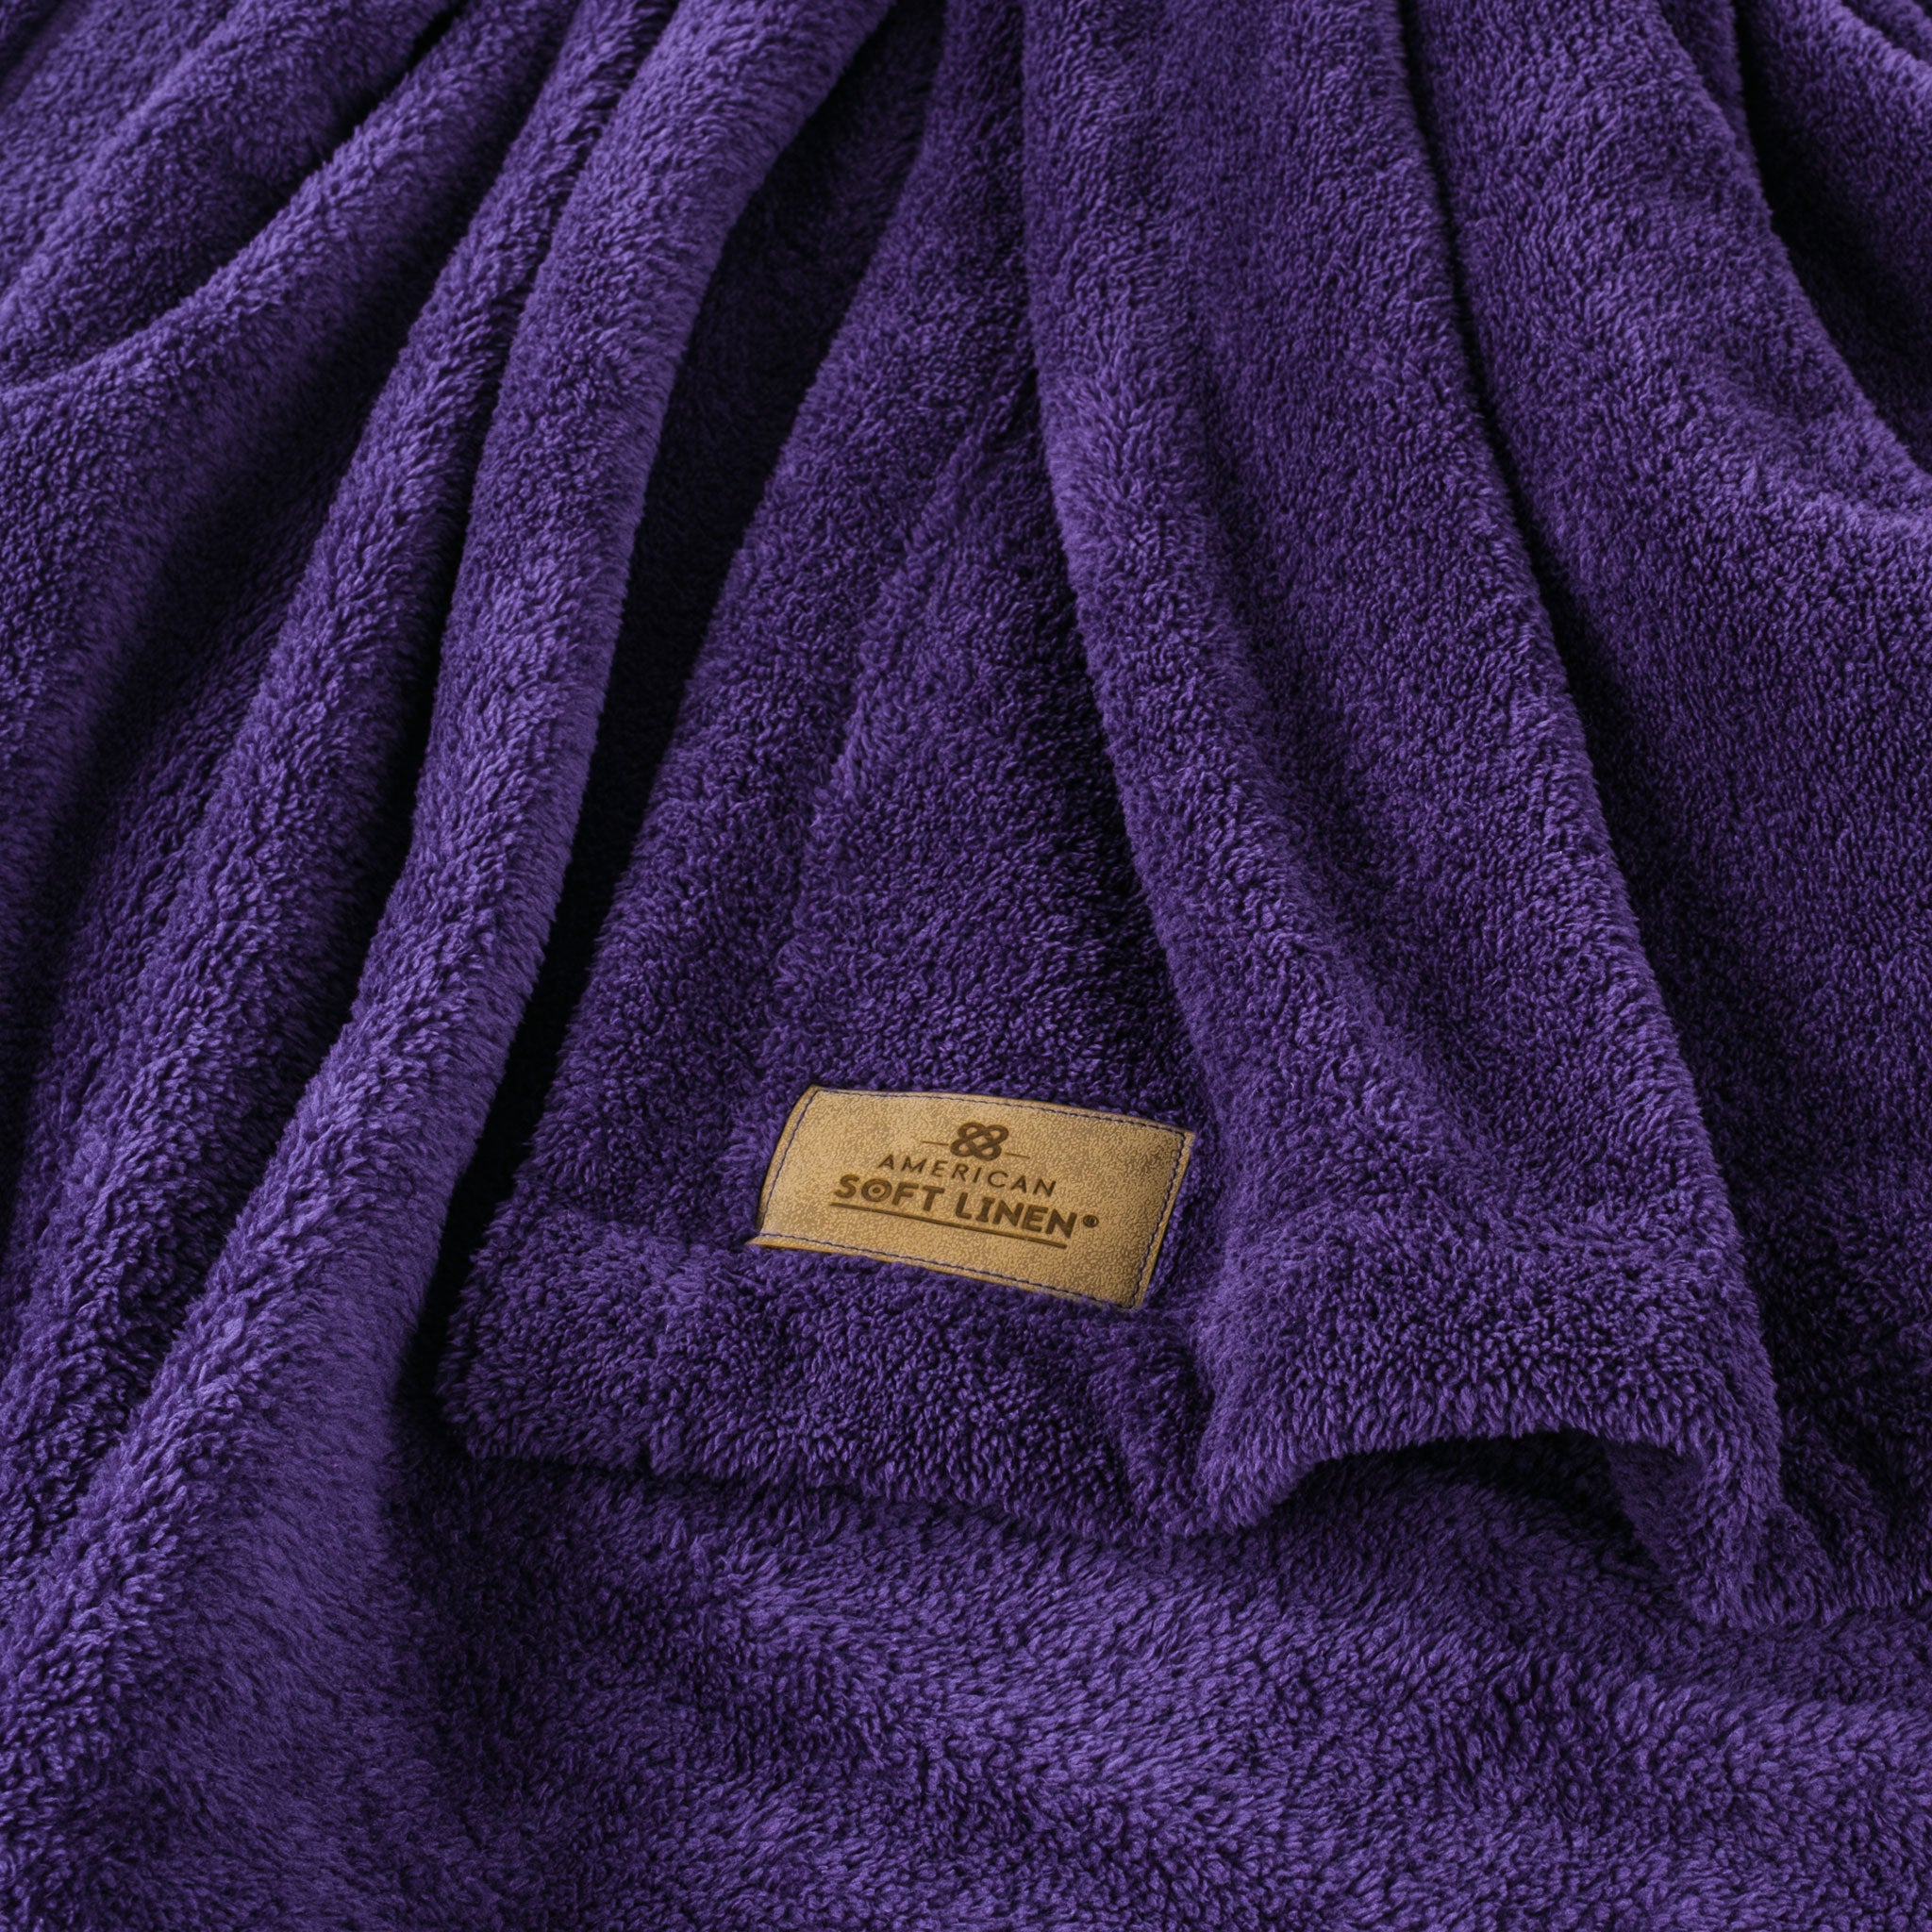 American Soft Linen - Bedding Fleece Blanket - Wholesale - 9 Set Case Pack - Queen Size 85x90 inches - Purple - 4